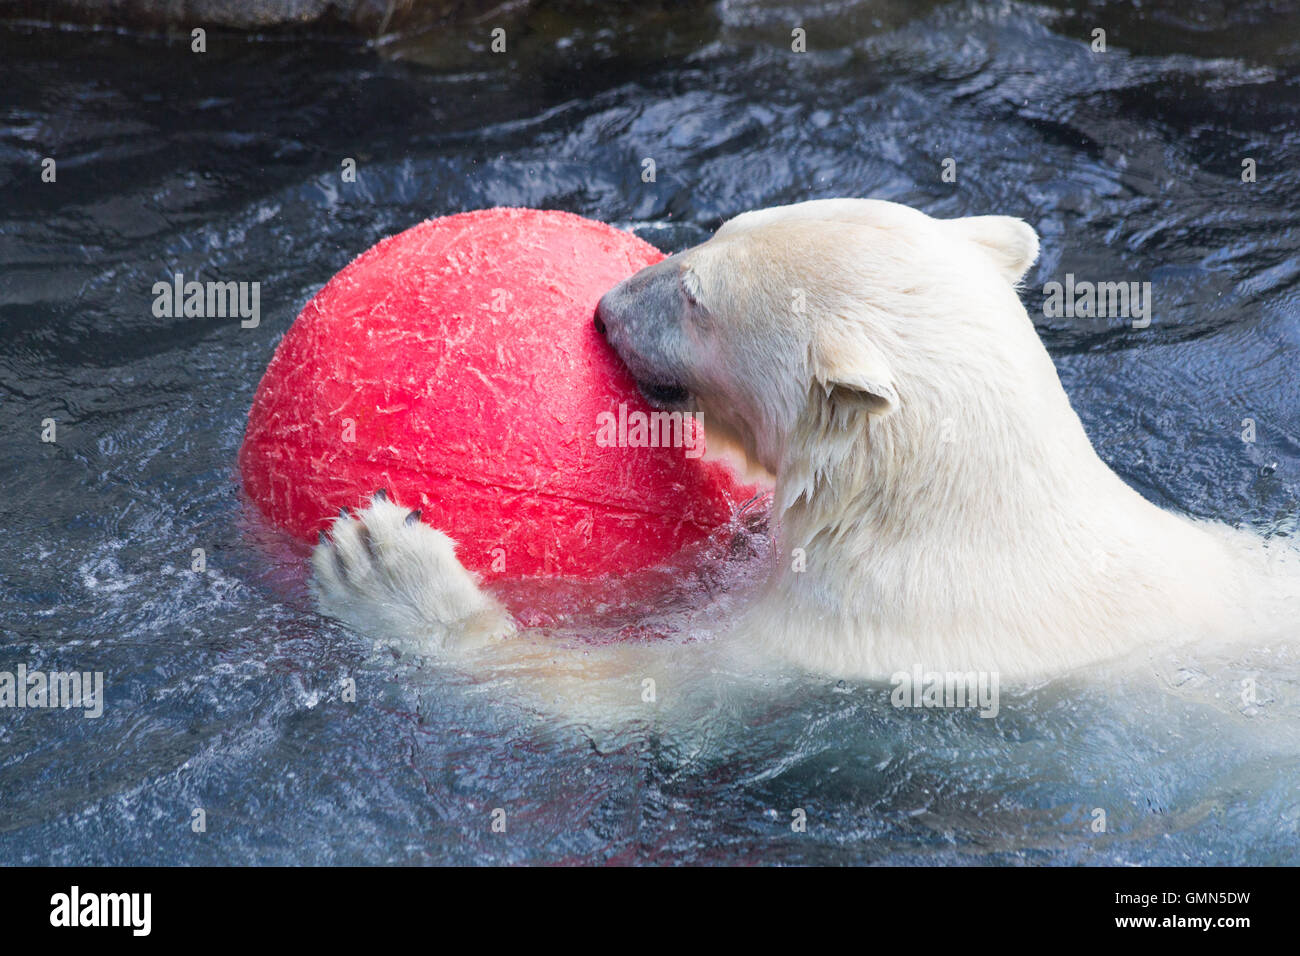 Thalarctos Maritimus (Ursus maritimus) commonly known as Polar bear Stock Photo